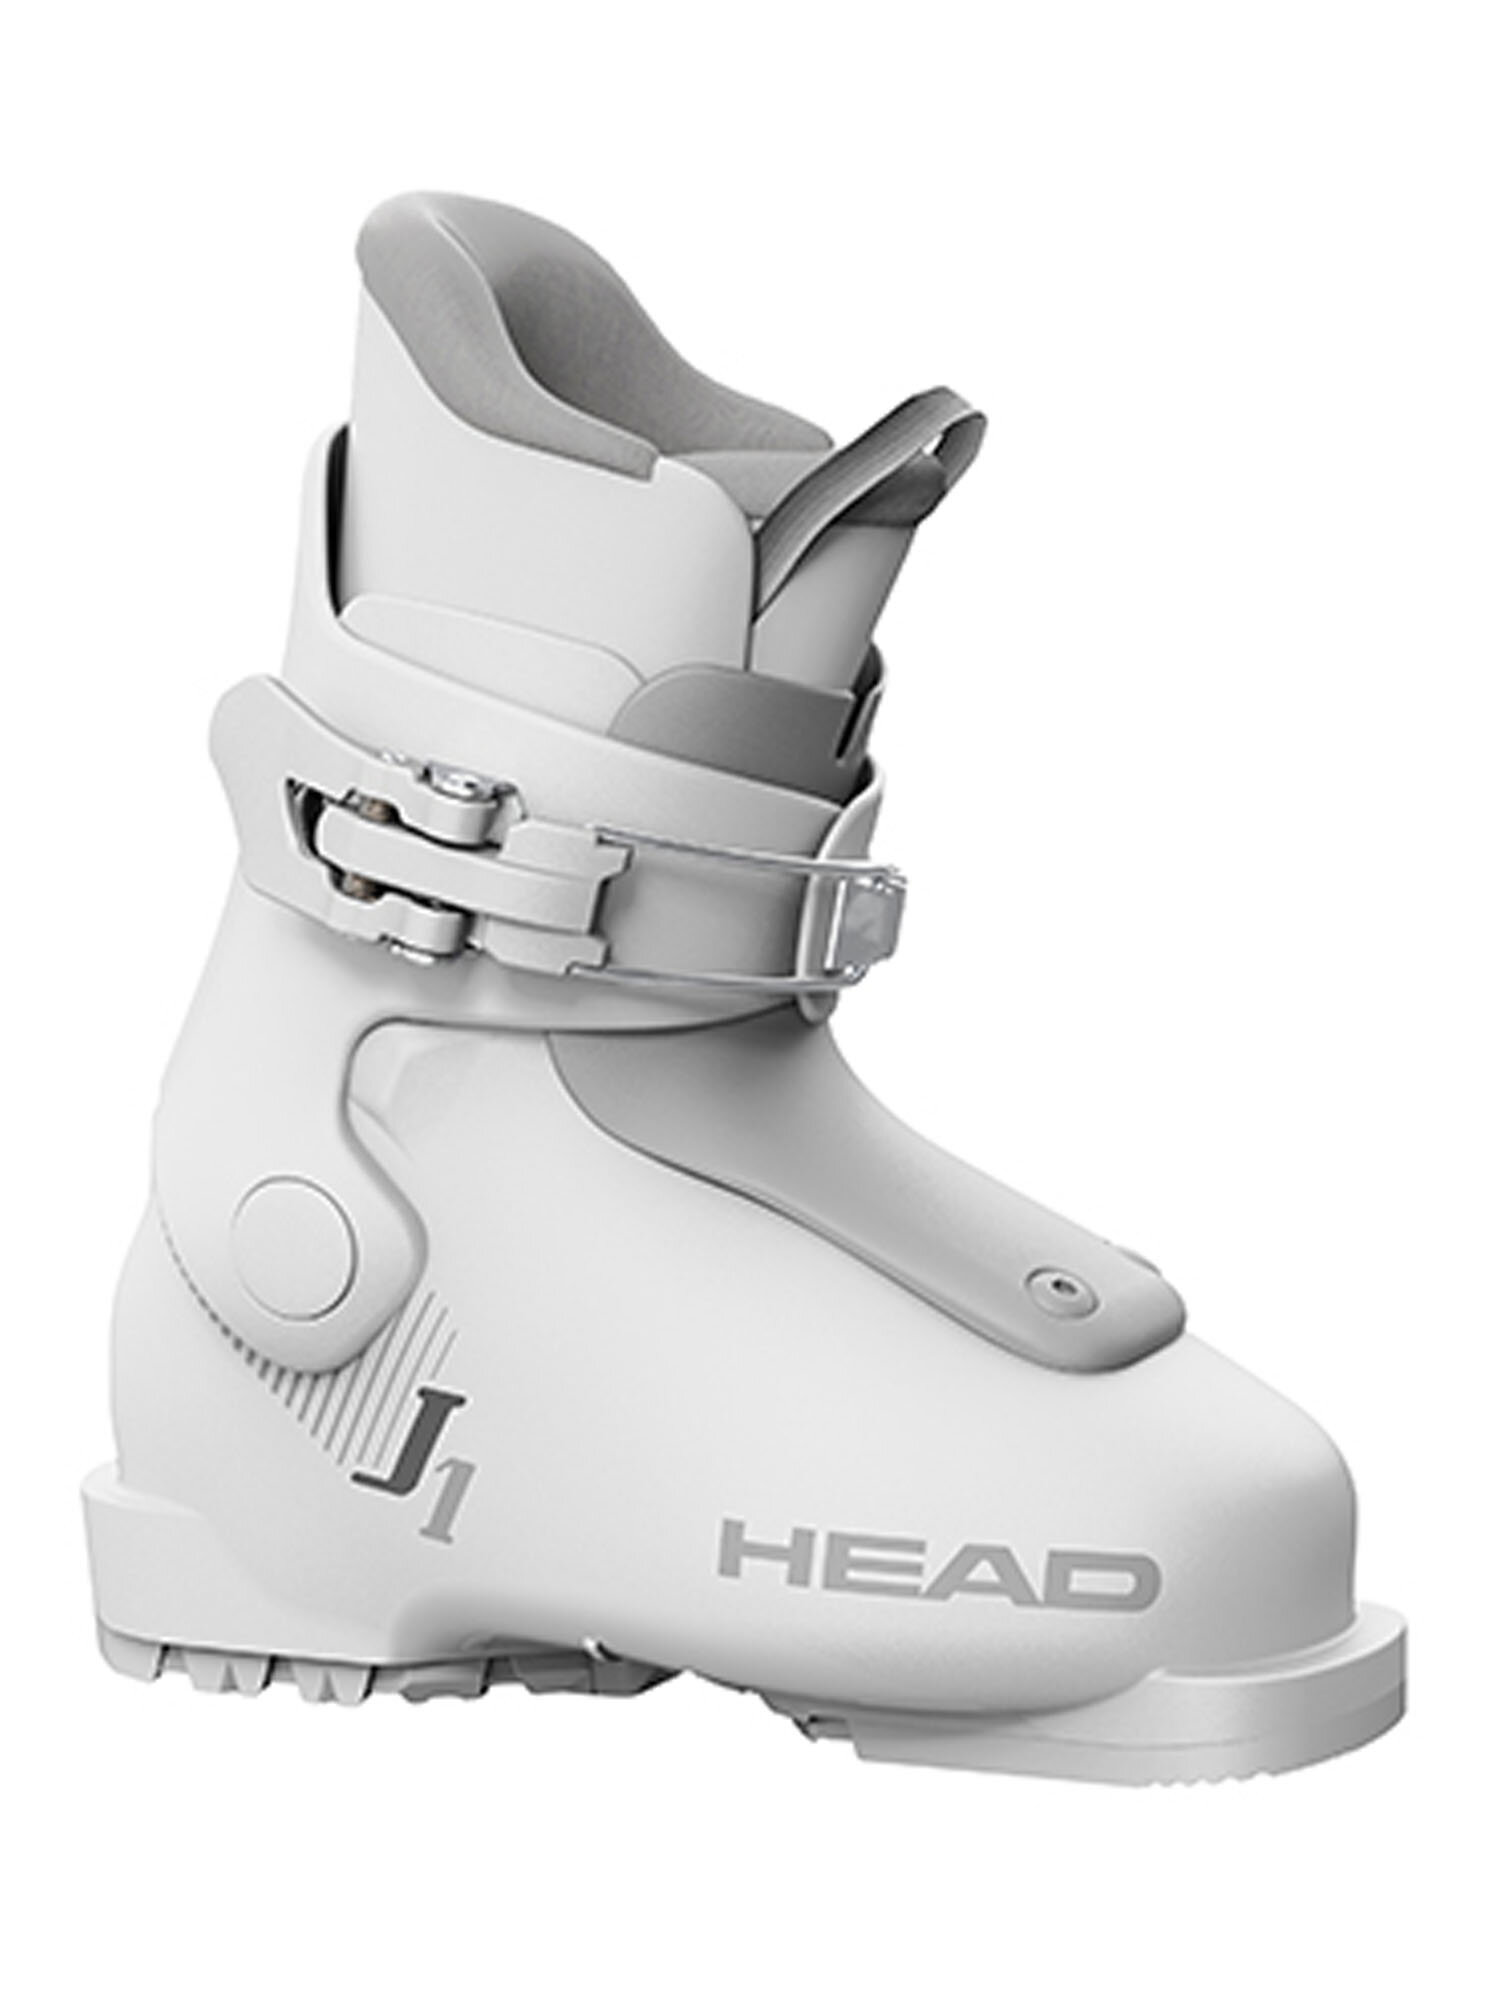 Горнолыжные ботинки HEAD HEAD J 1